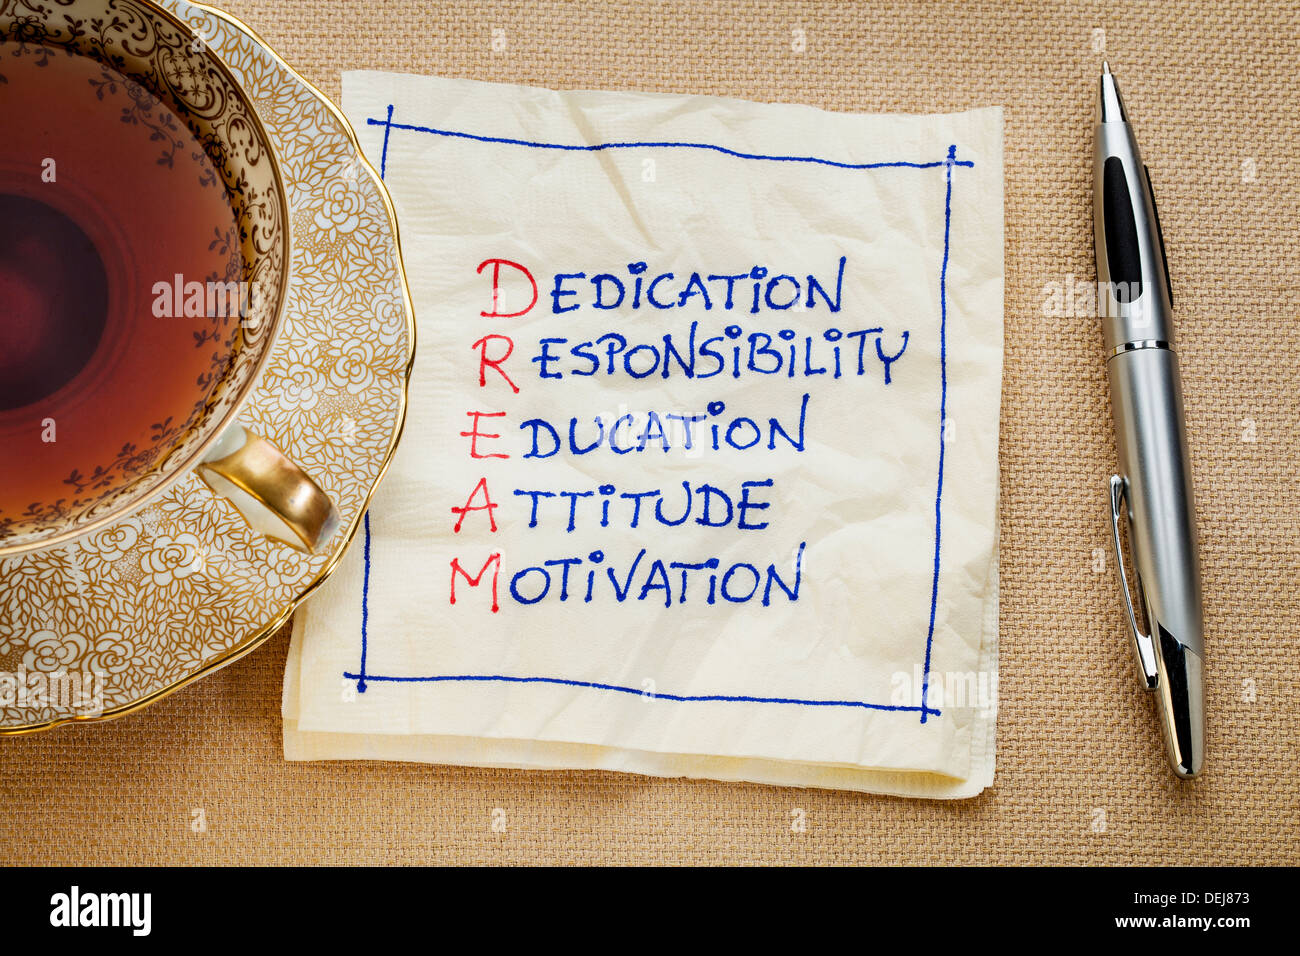 dedication, responsibility, education, attitude, motivation - DREAM acronym - a napkin doodle with a cup of tea Stock Photo